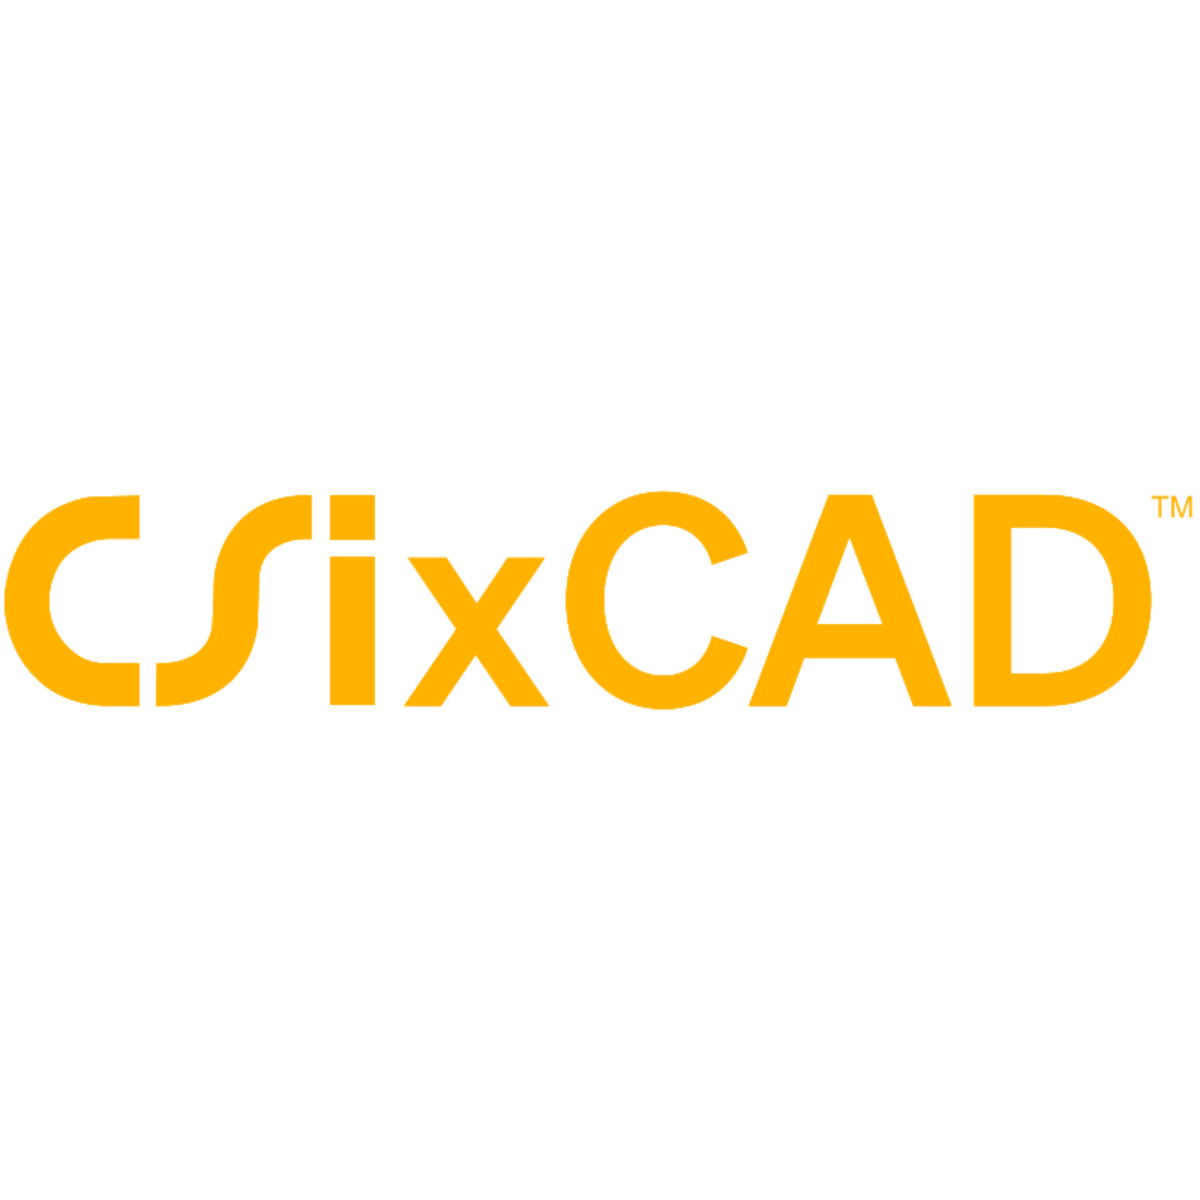 CsiXCAD Logo